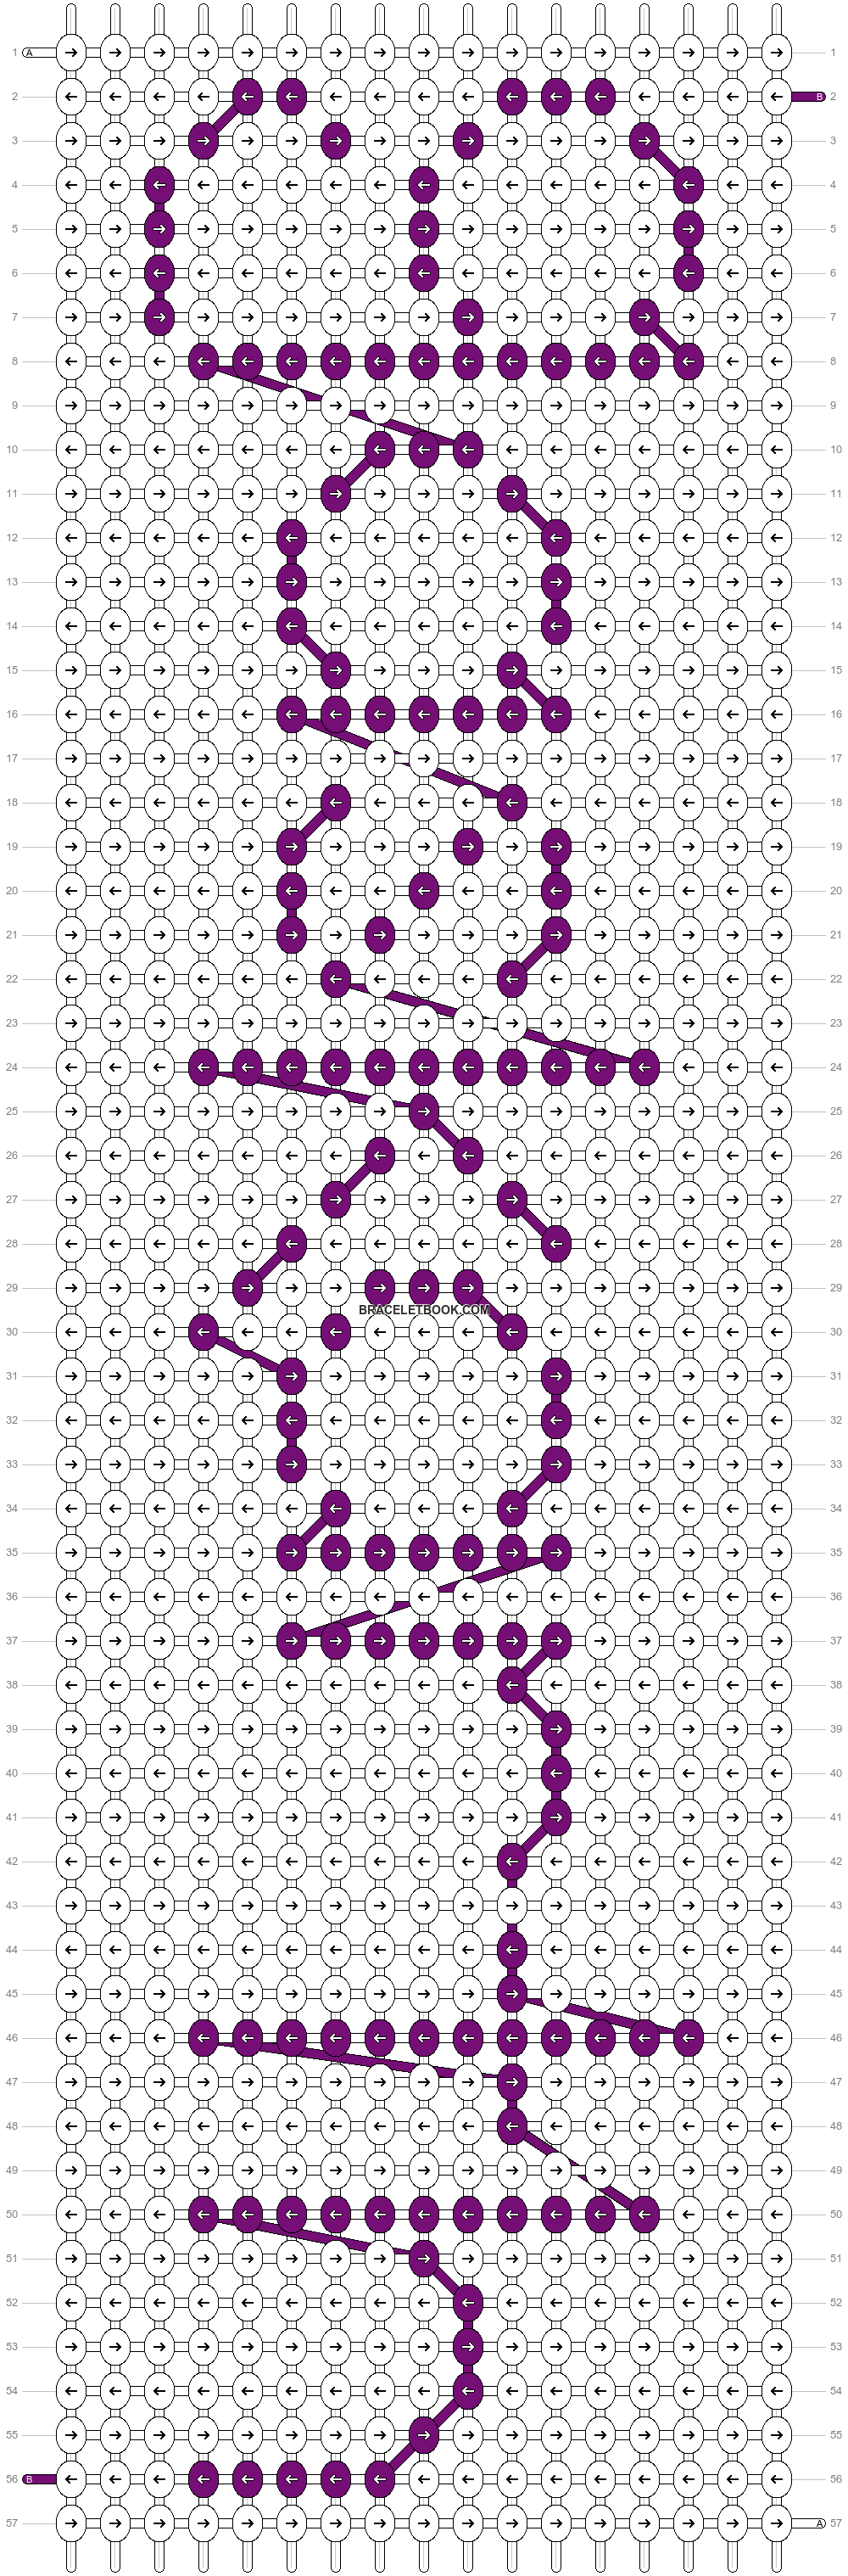 Alpha pattern #9176 pattern